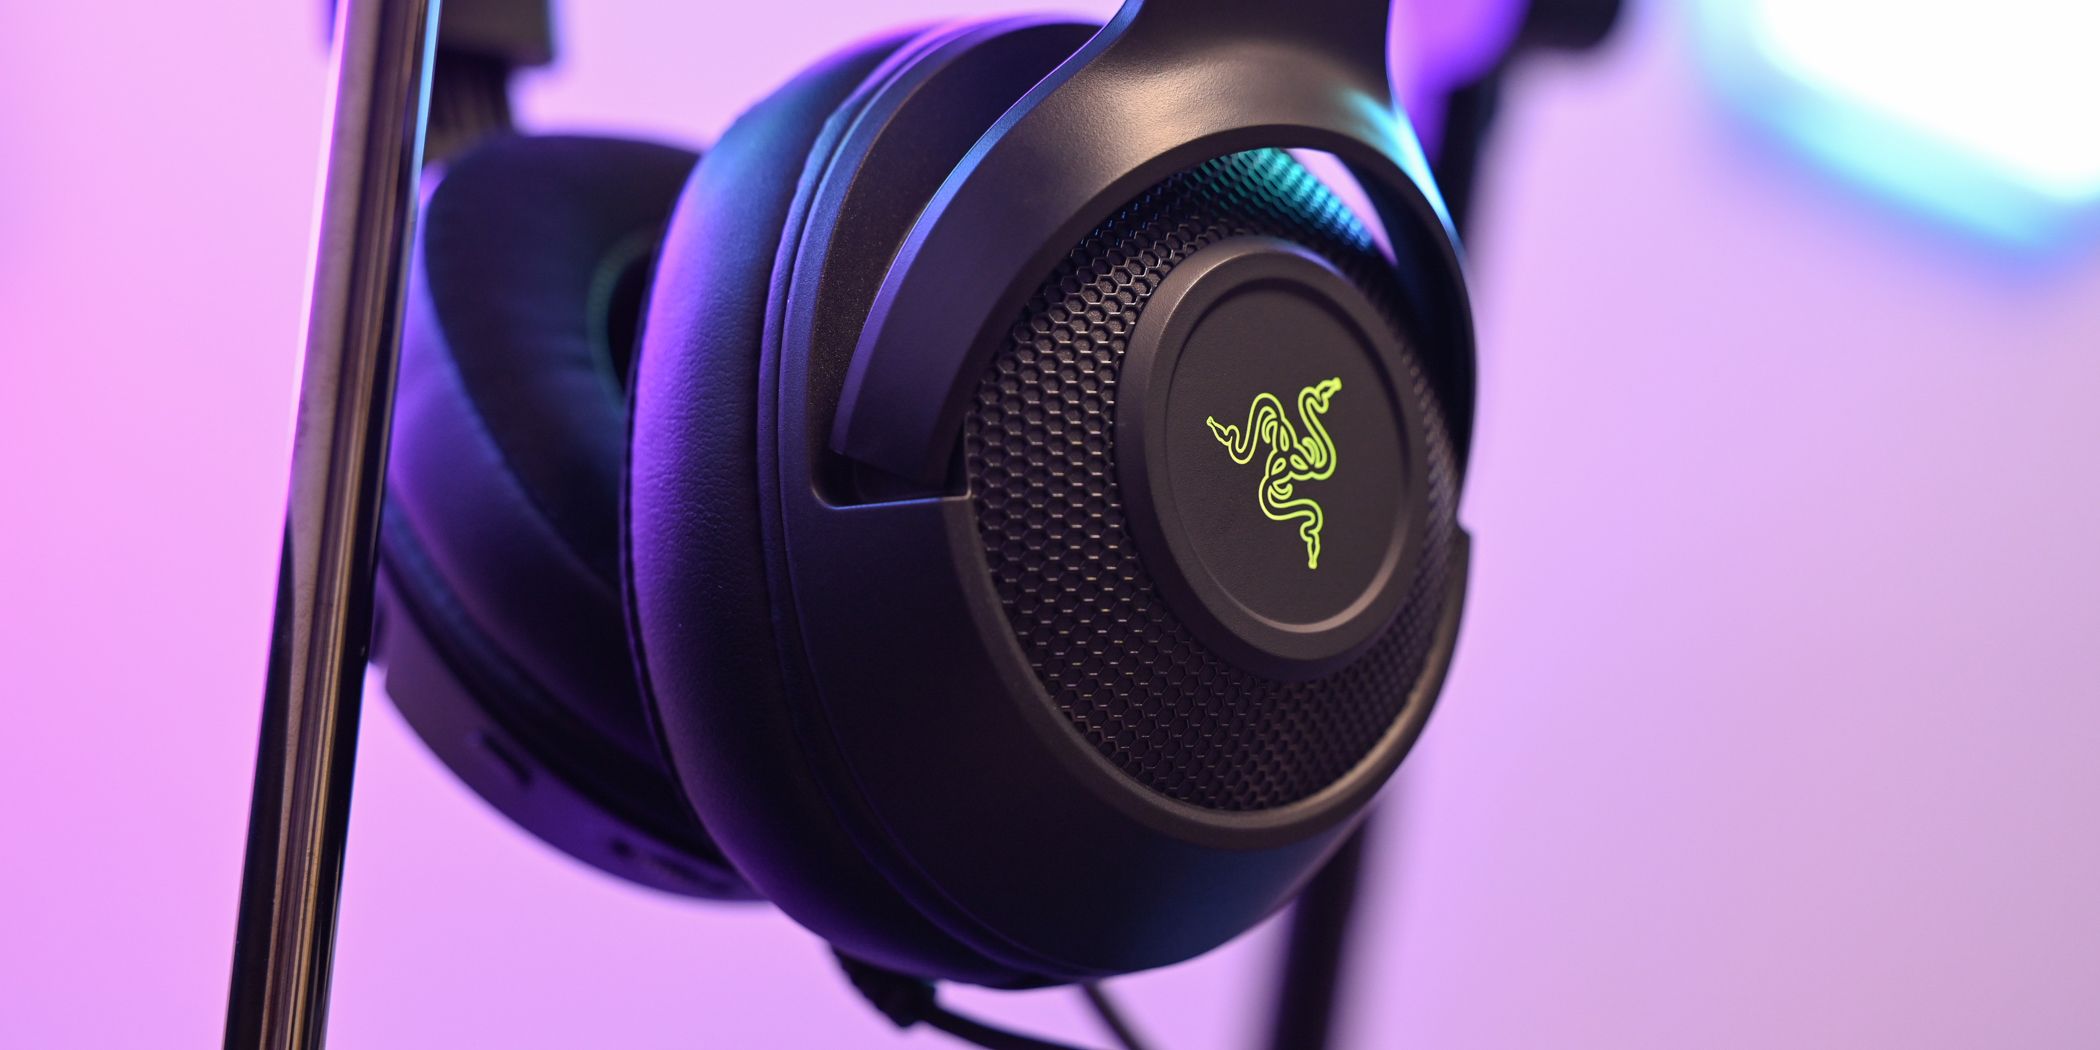 The Razer Kraken V3 X Headset on a headphone stand with the Razer logo illuminated green